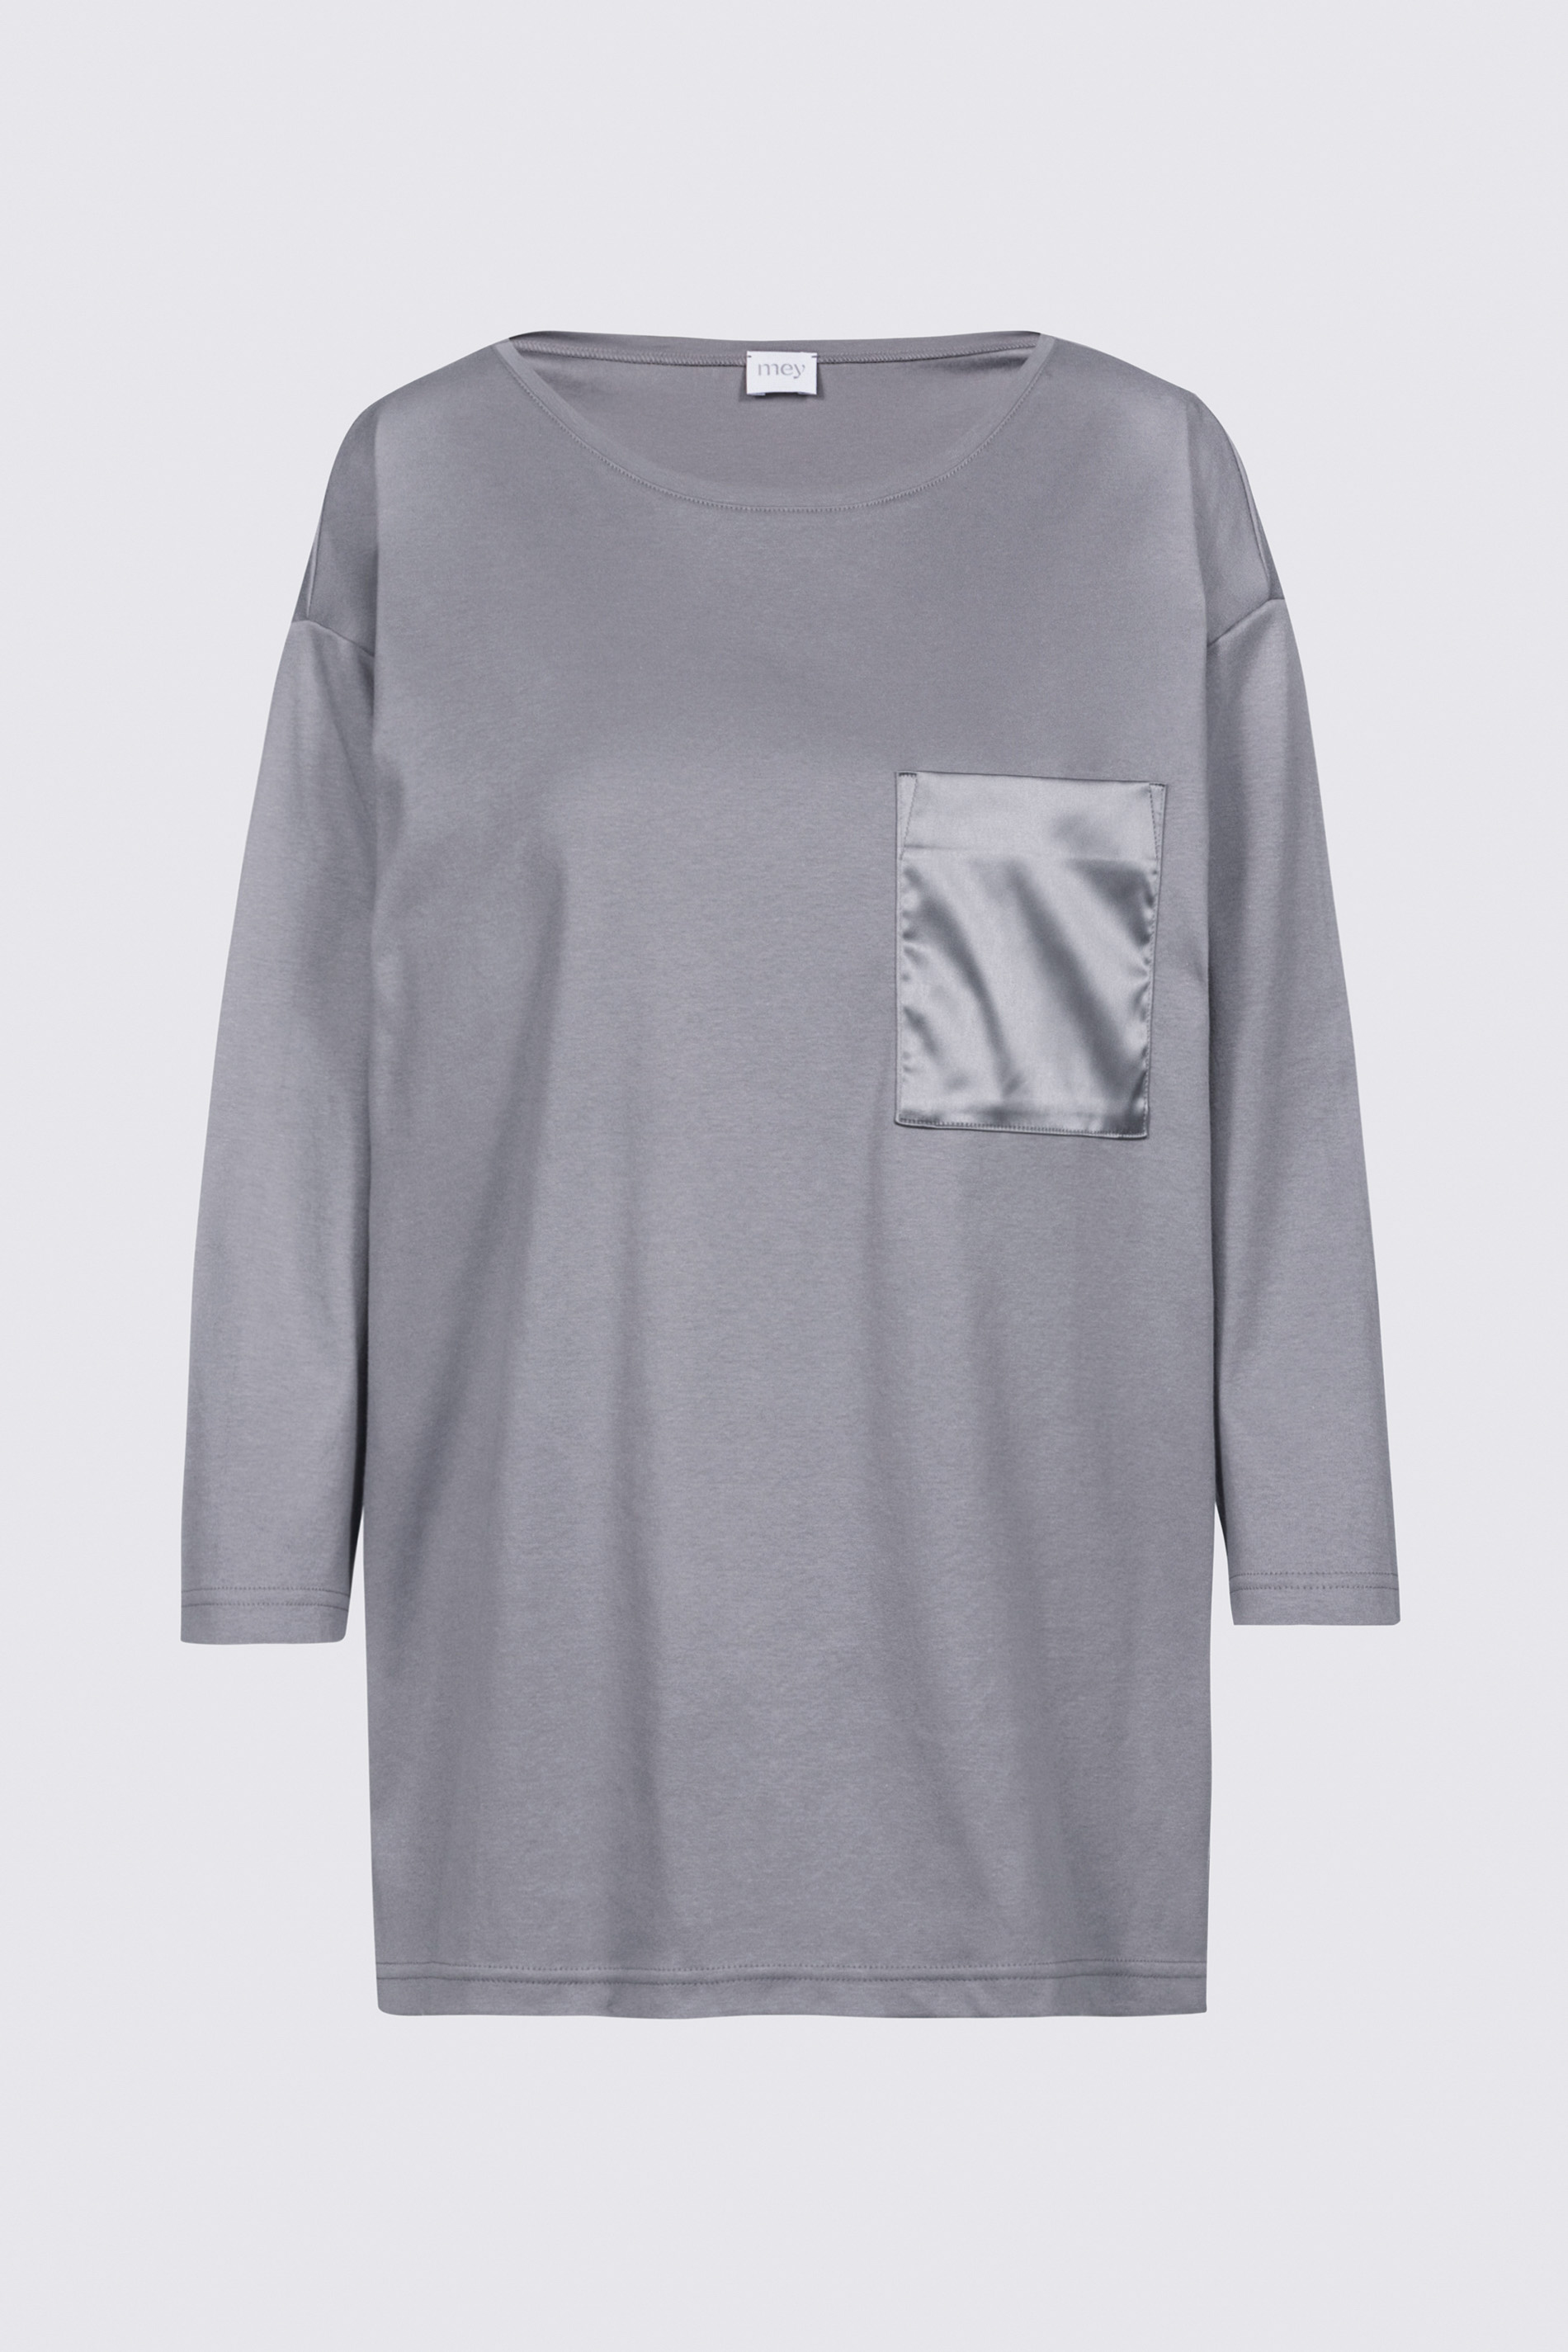 Shirt Lovely Grey Serie Sleepsation Cut Out | mey®